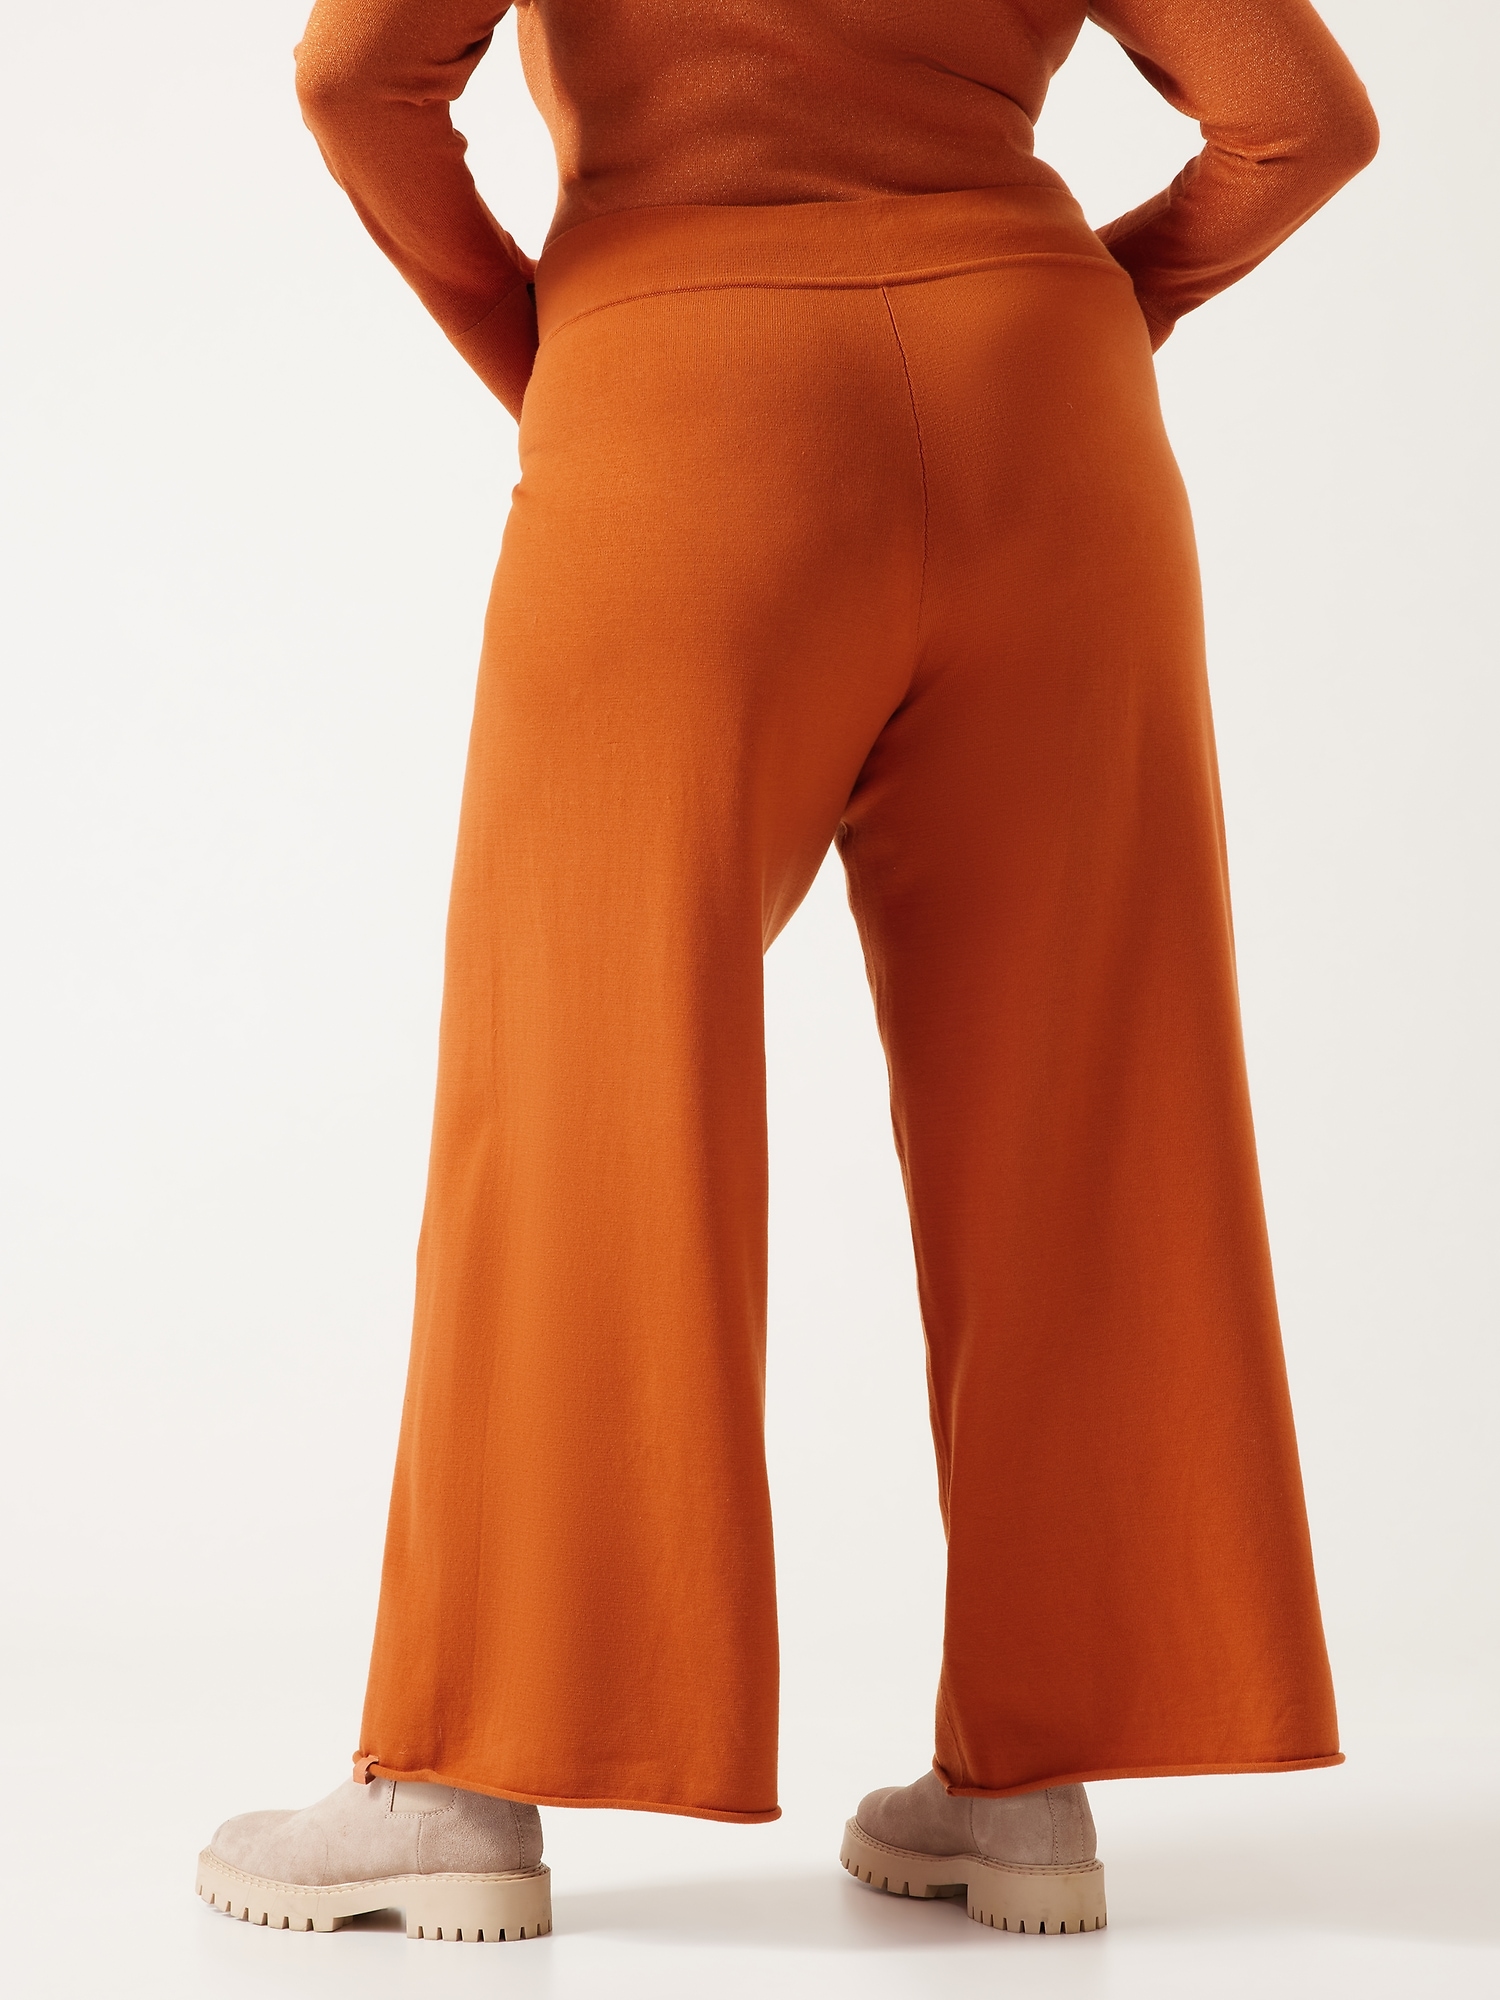 Athleta, Pants & Jumpsuits, New Athleta X Alicia Keys Elation Tight  Leggings Orange Bright Ribbed Jewel